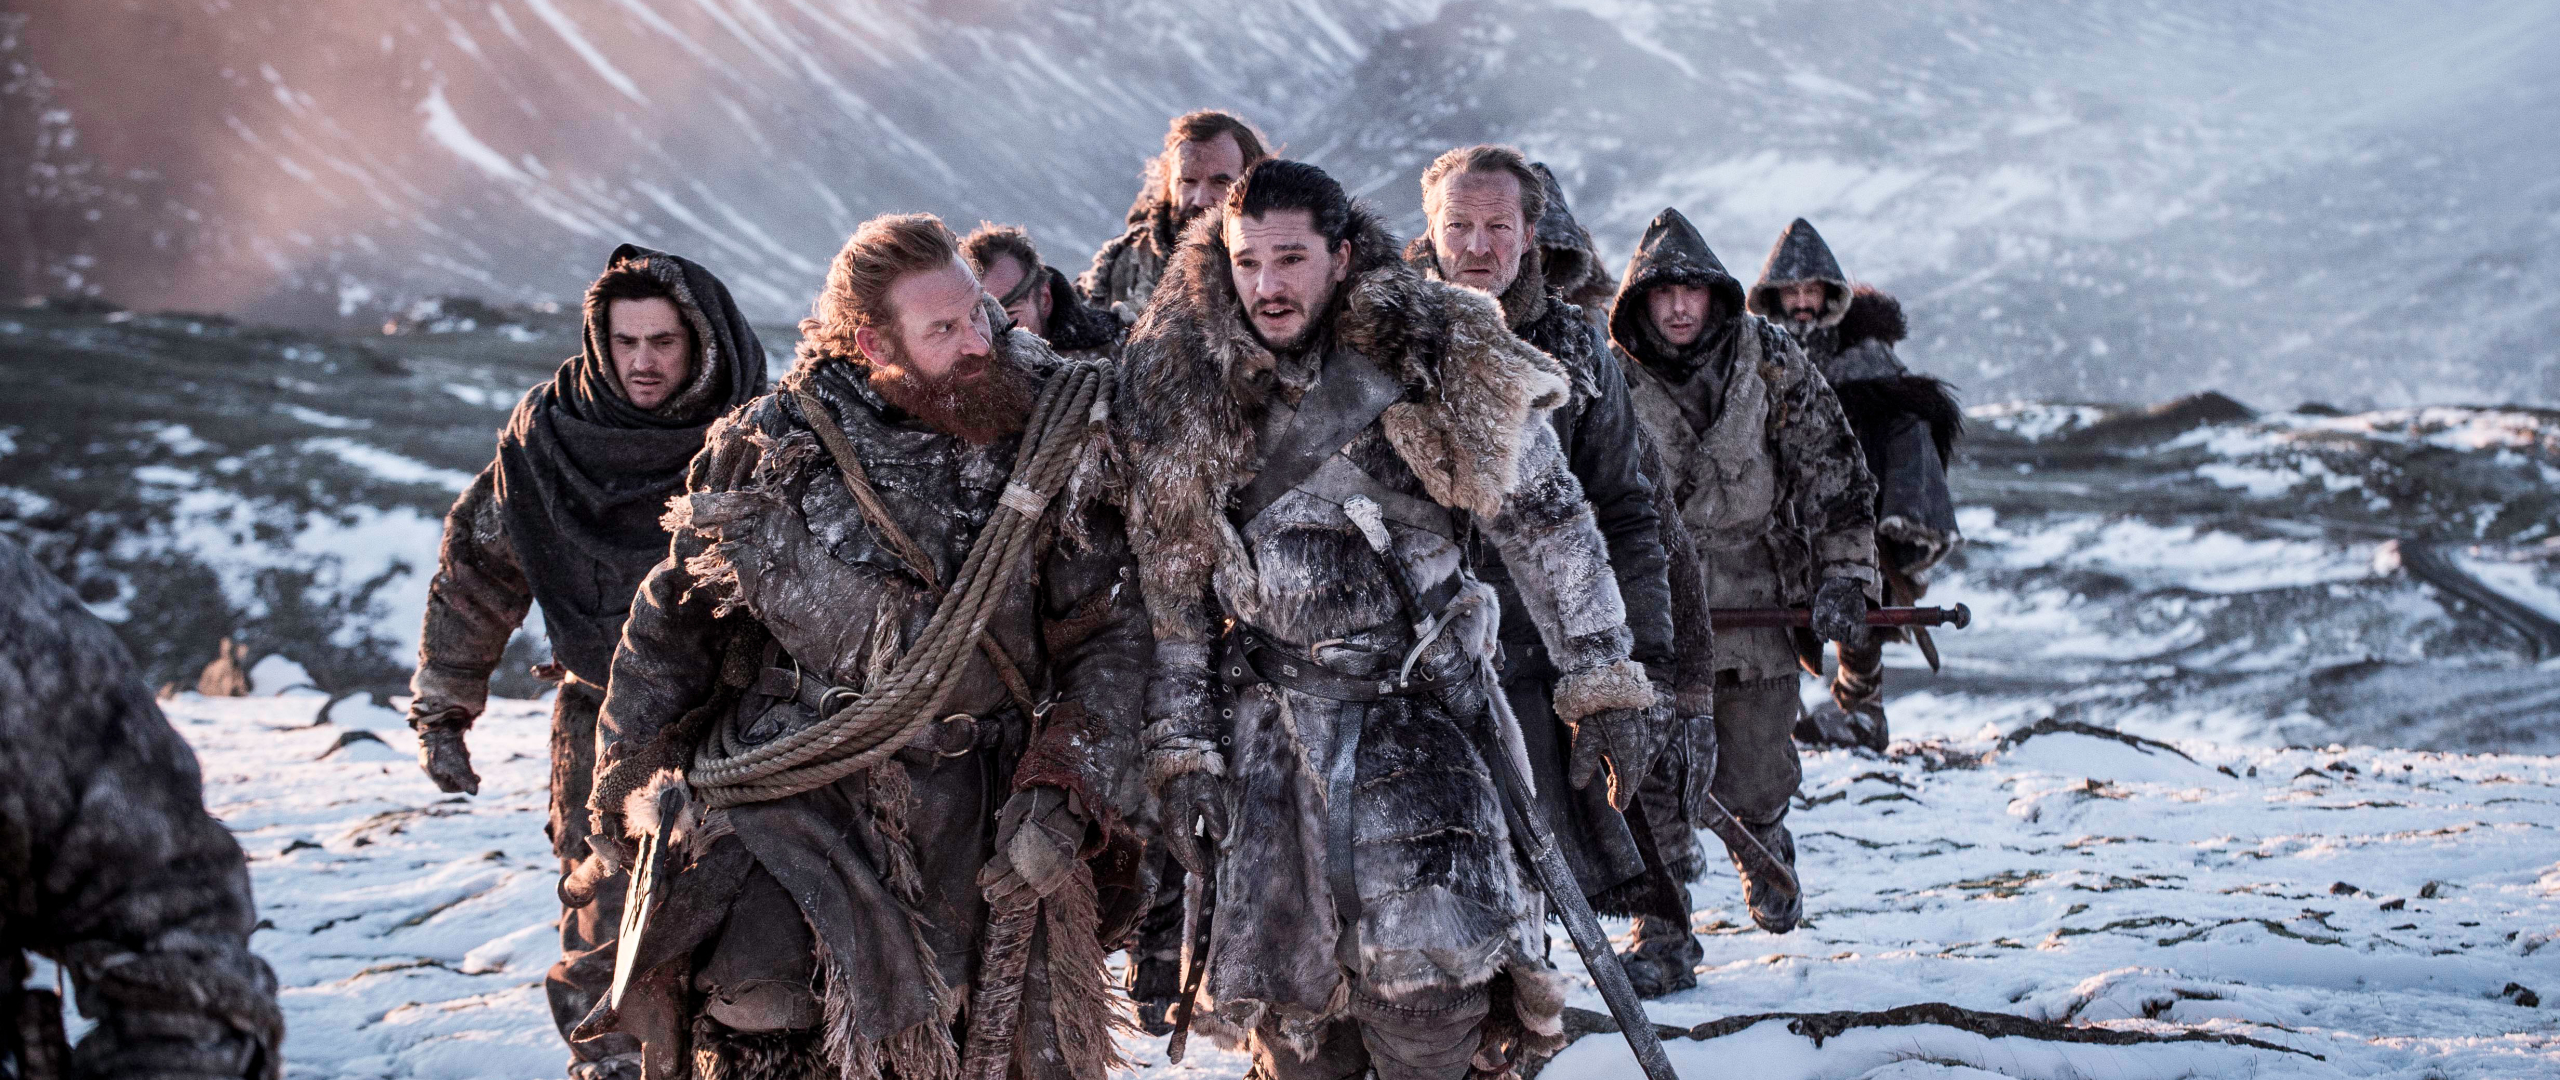 Download Game Of Thrones Season 7 Hdtv